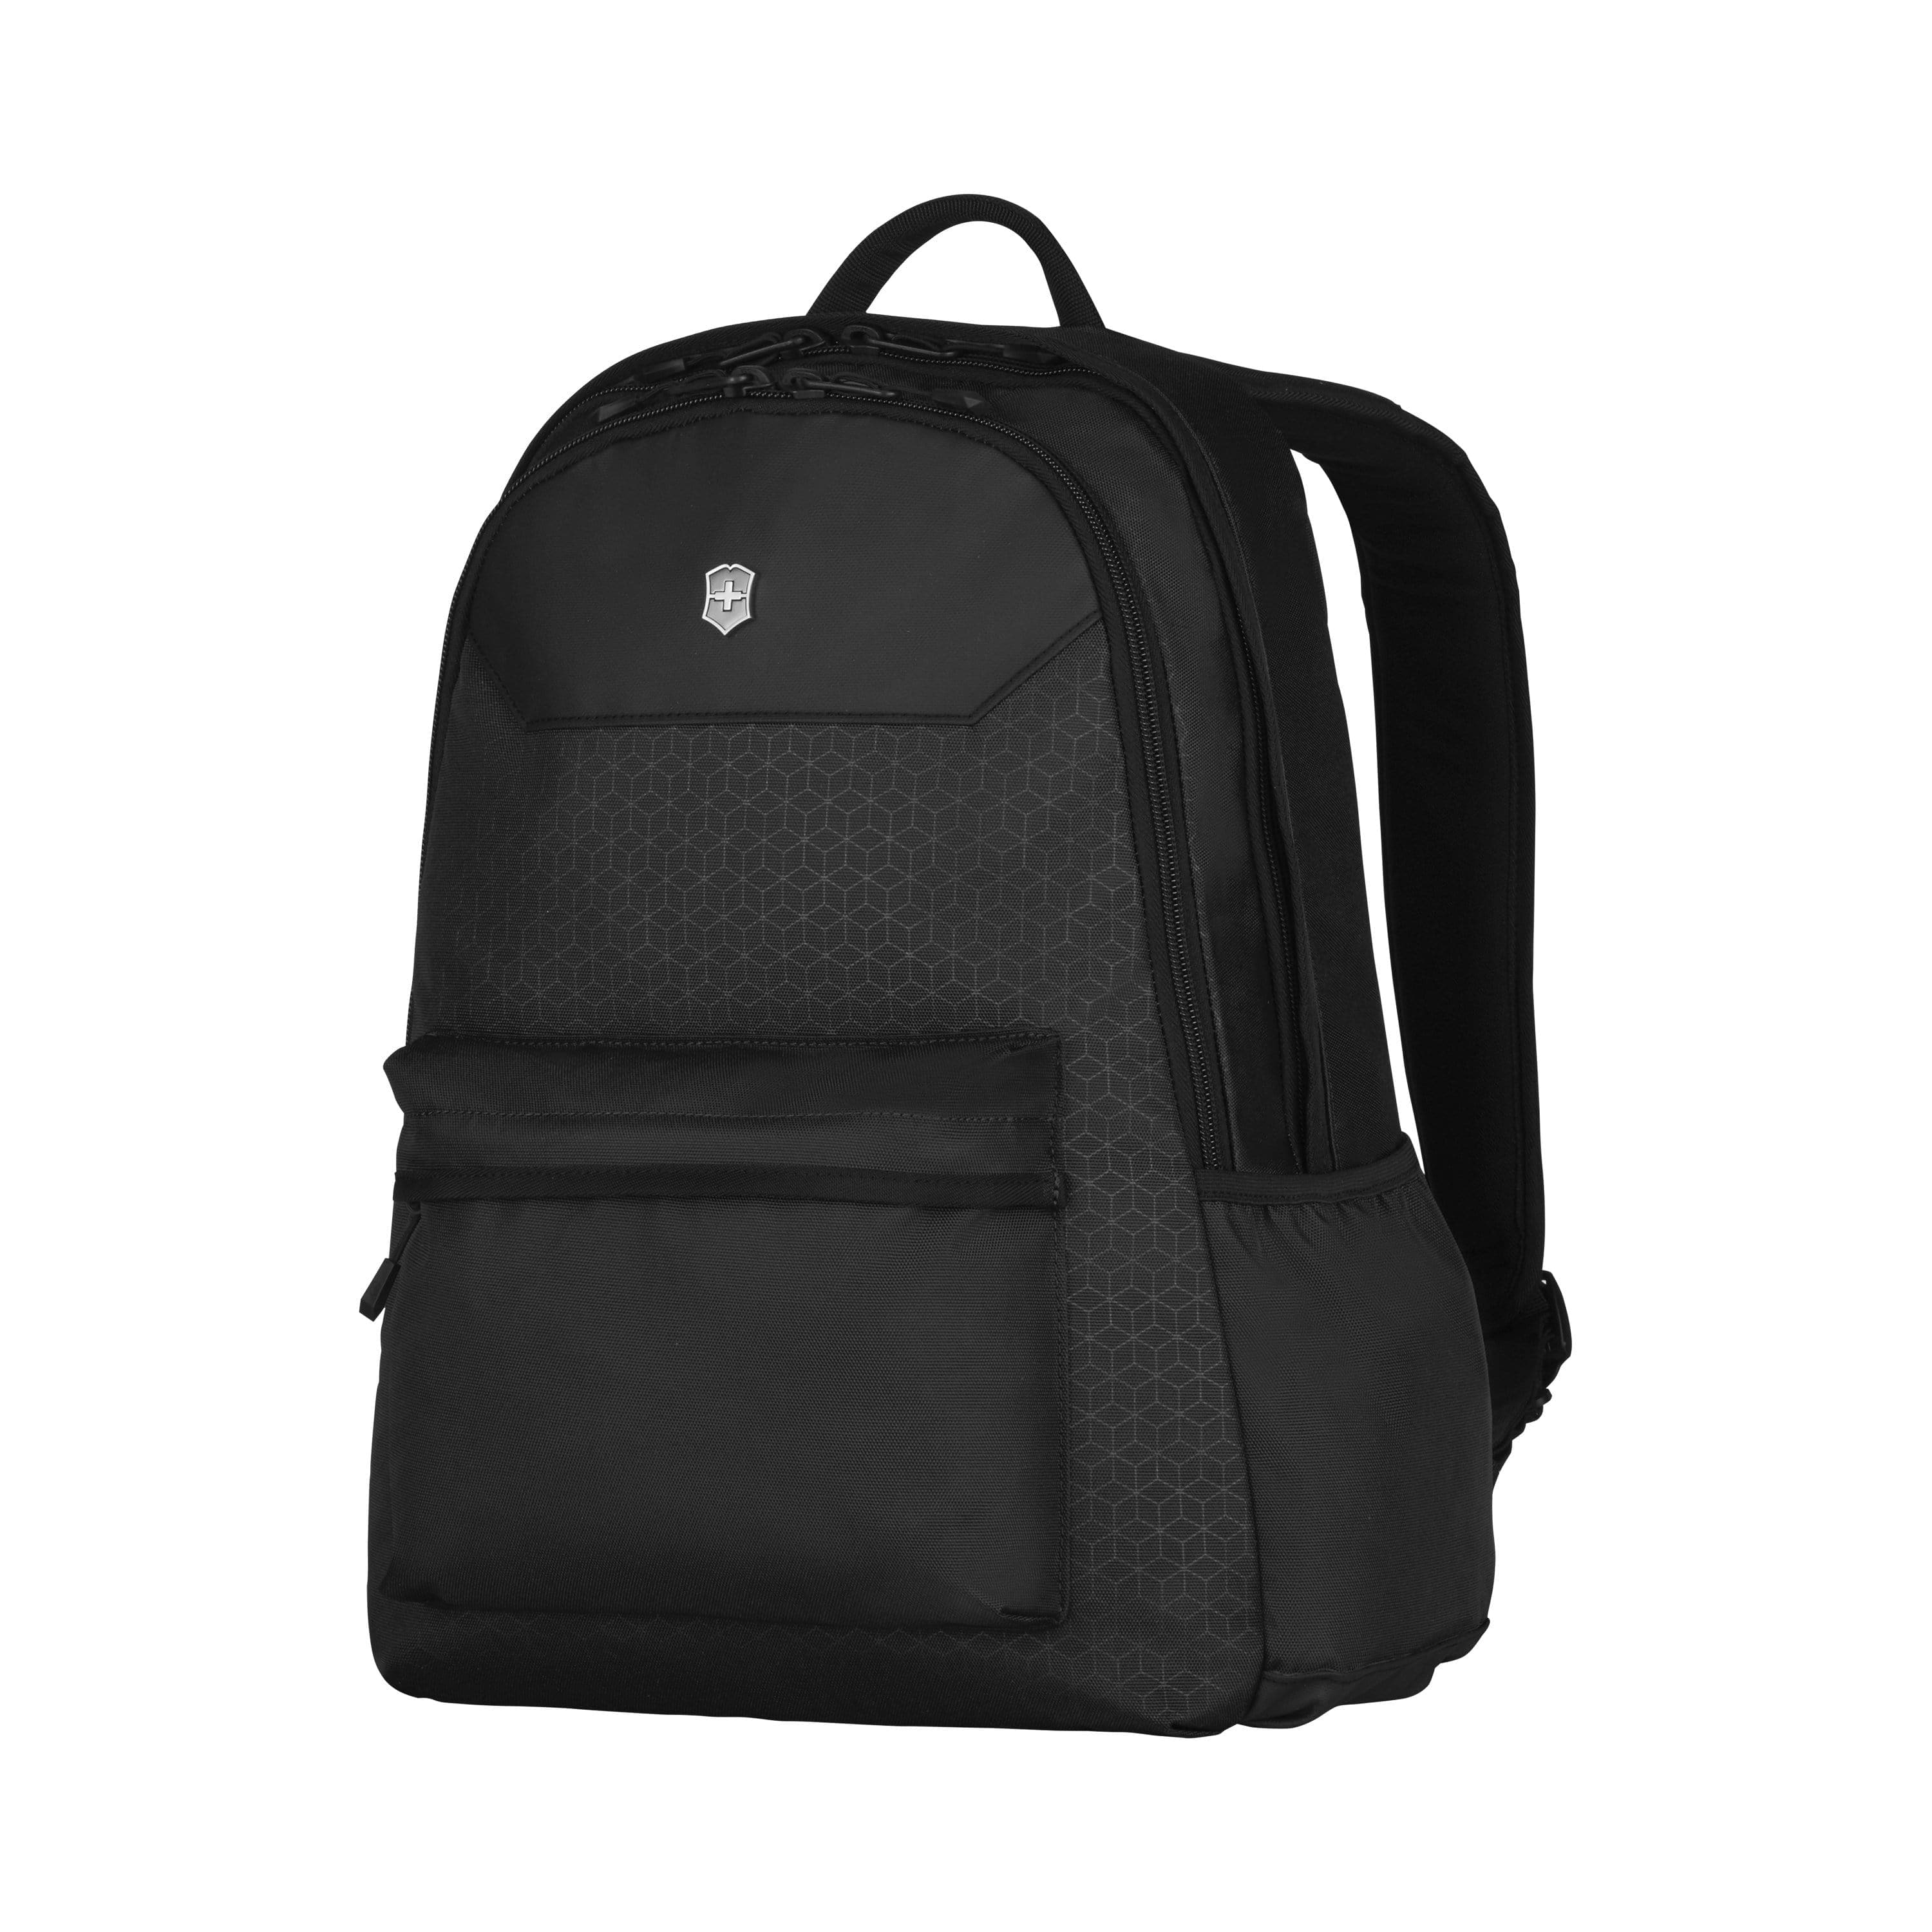 Victorinox Altmont Original Standard 17 inch Laptop Backpack Black - 606736